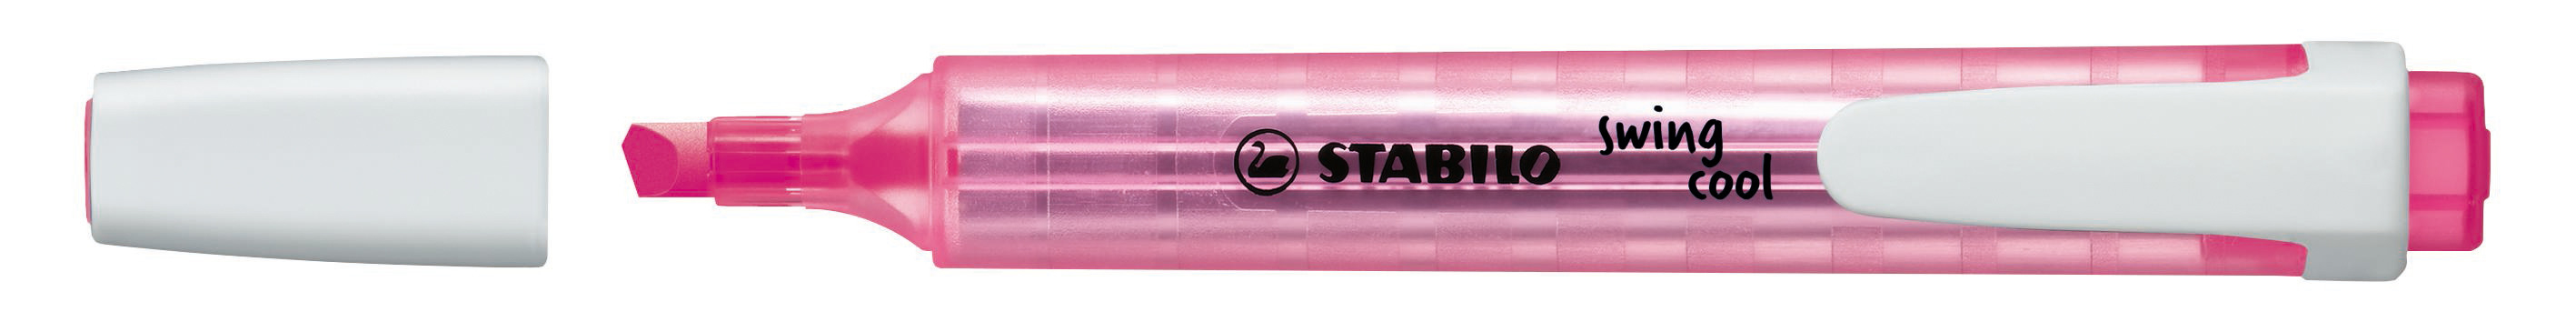 STABILO Swing Cool Leuchtmarker 275/56 pink